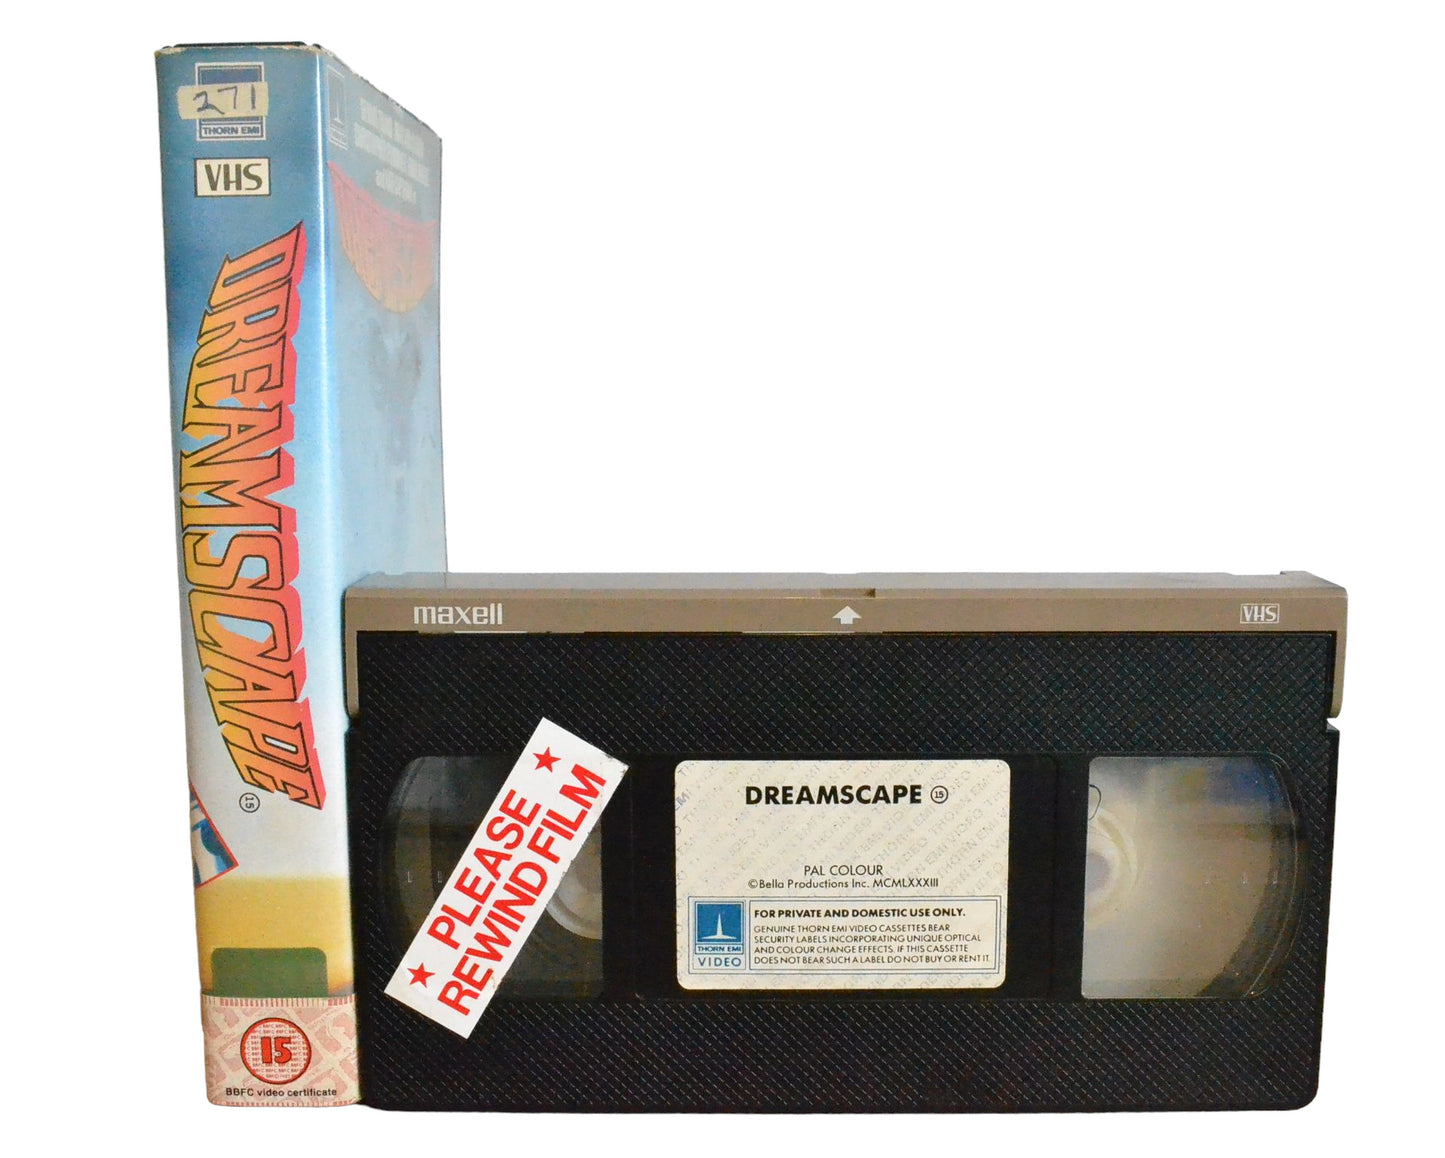 DreamScape - Dennis Quaid - Thorn EMI Video - TVA 9025572 - Horror - Precert - Pal - VHS-